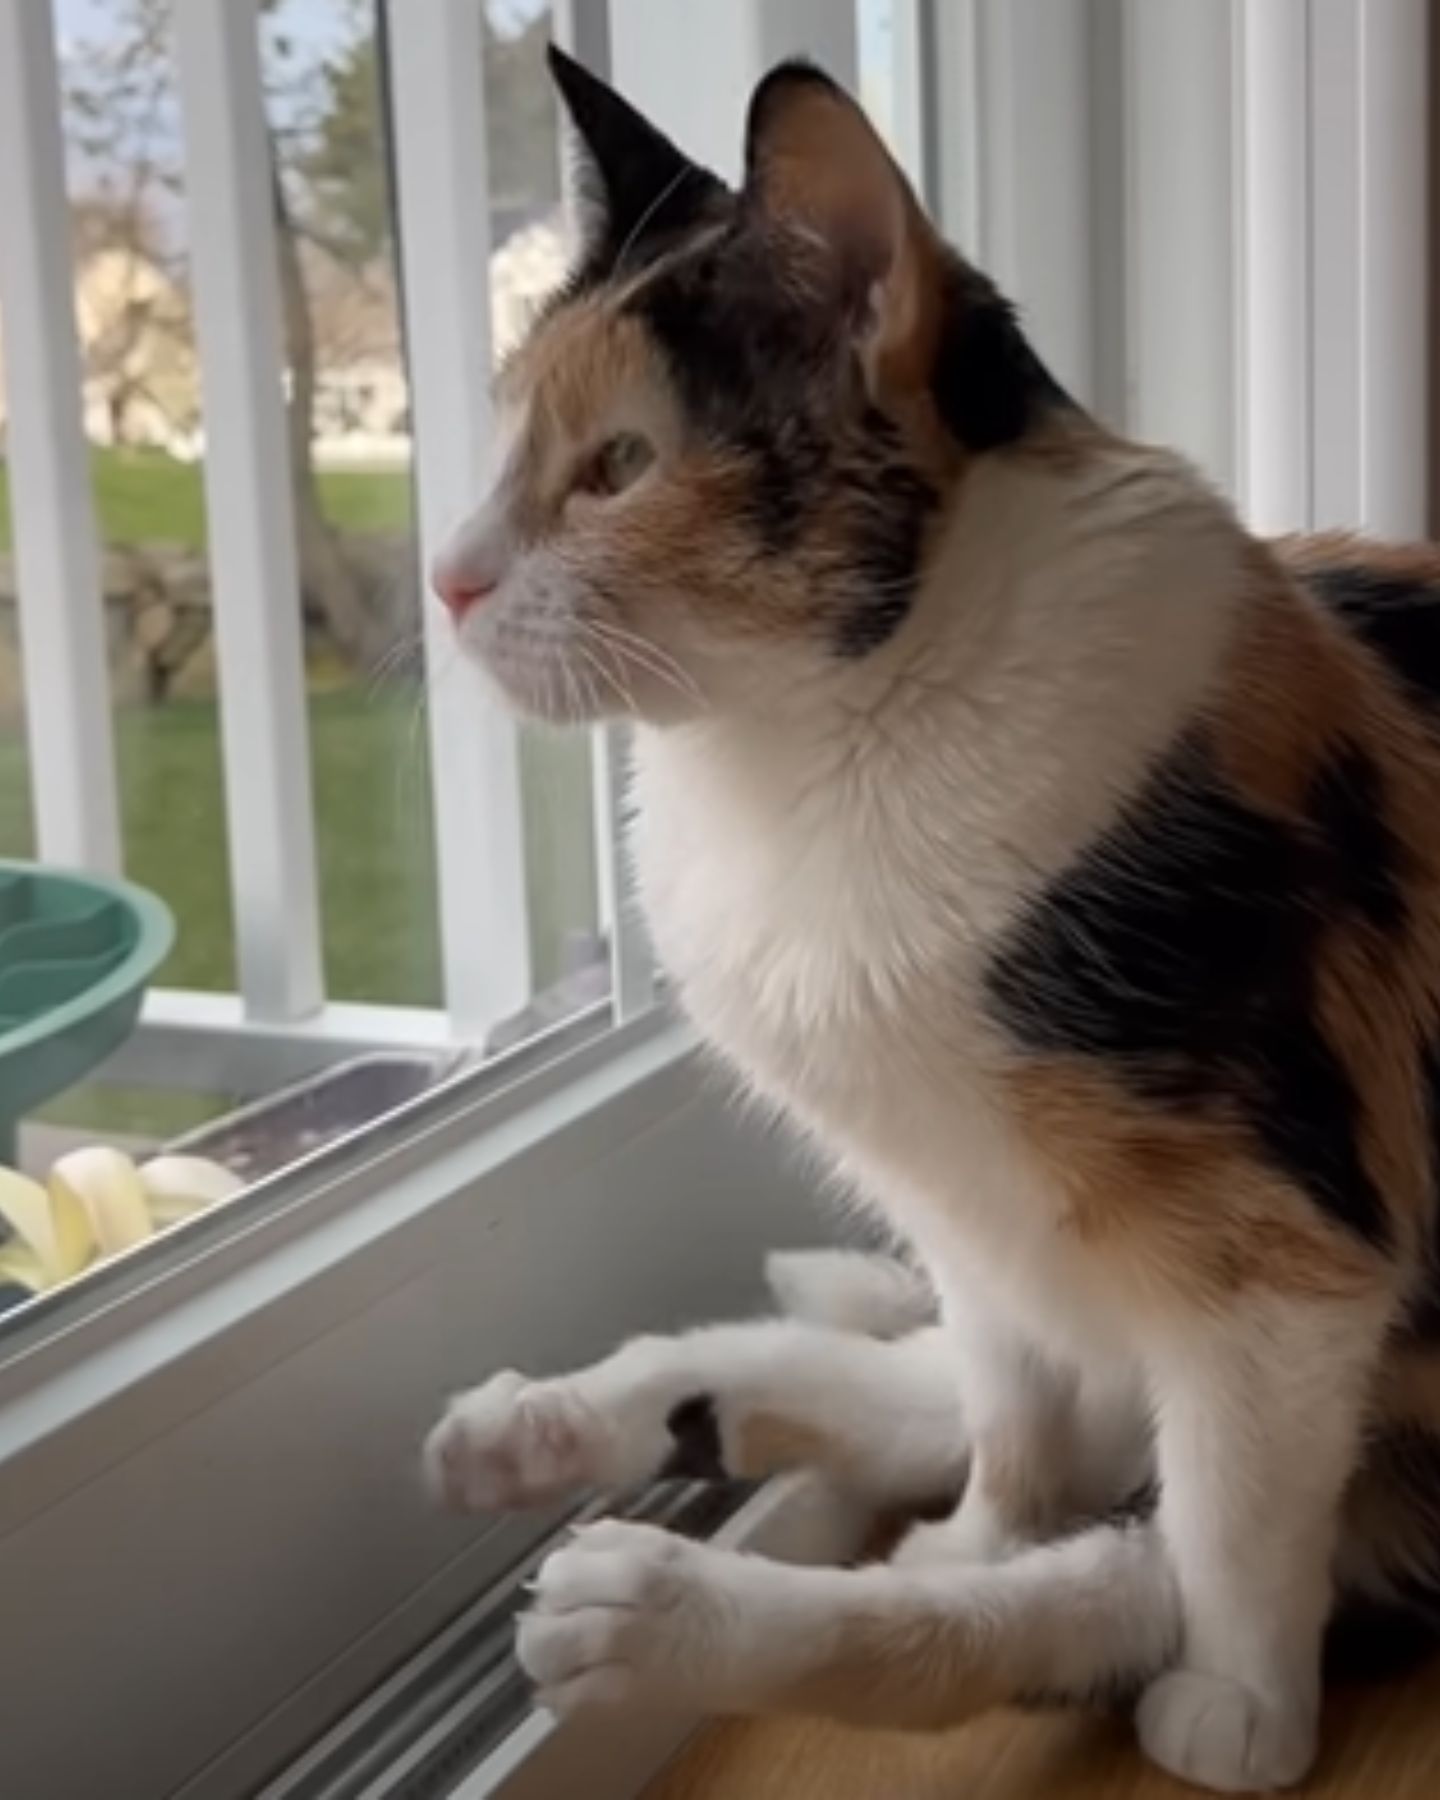 photo of cat sitting on window sill